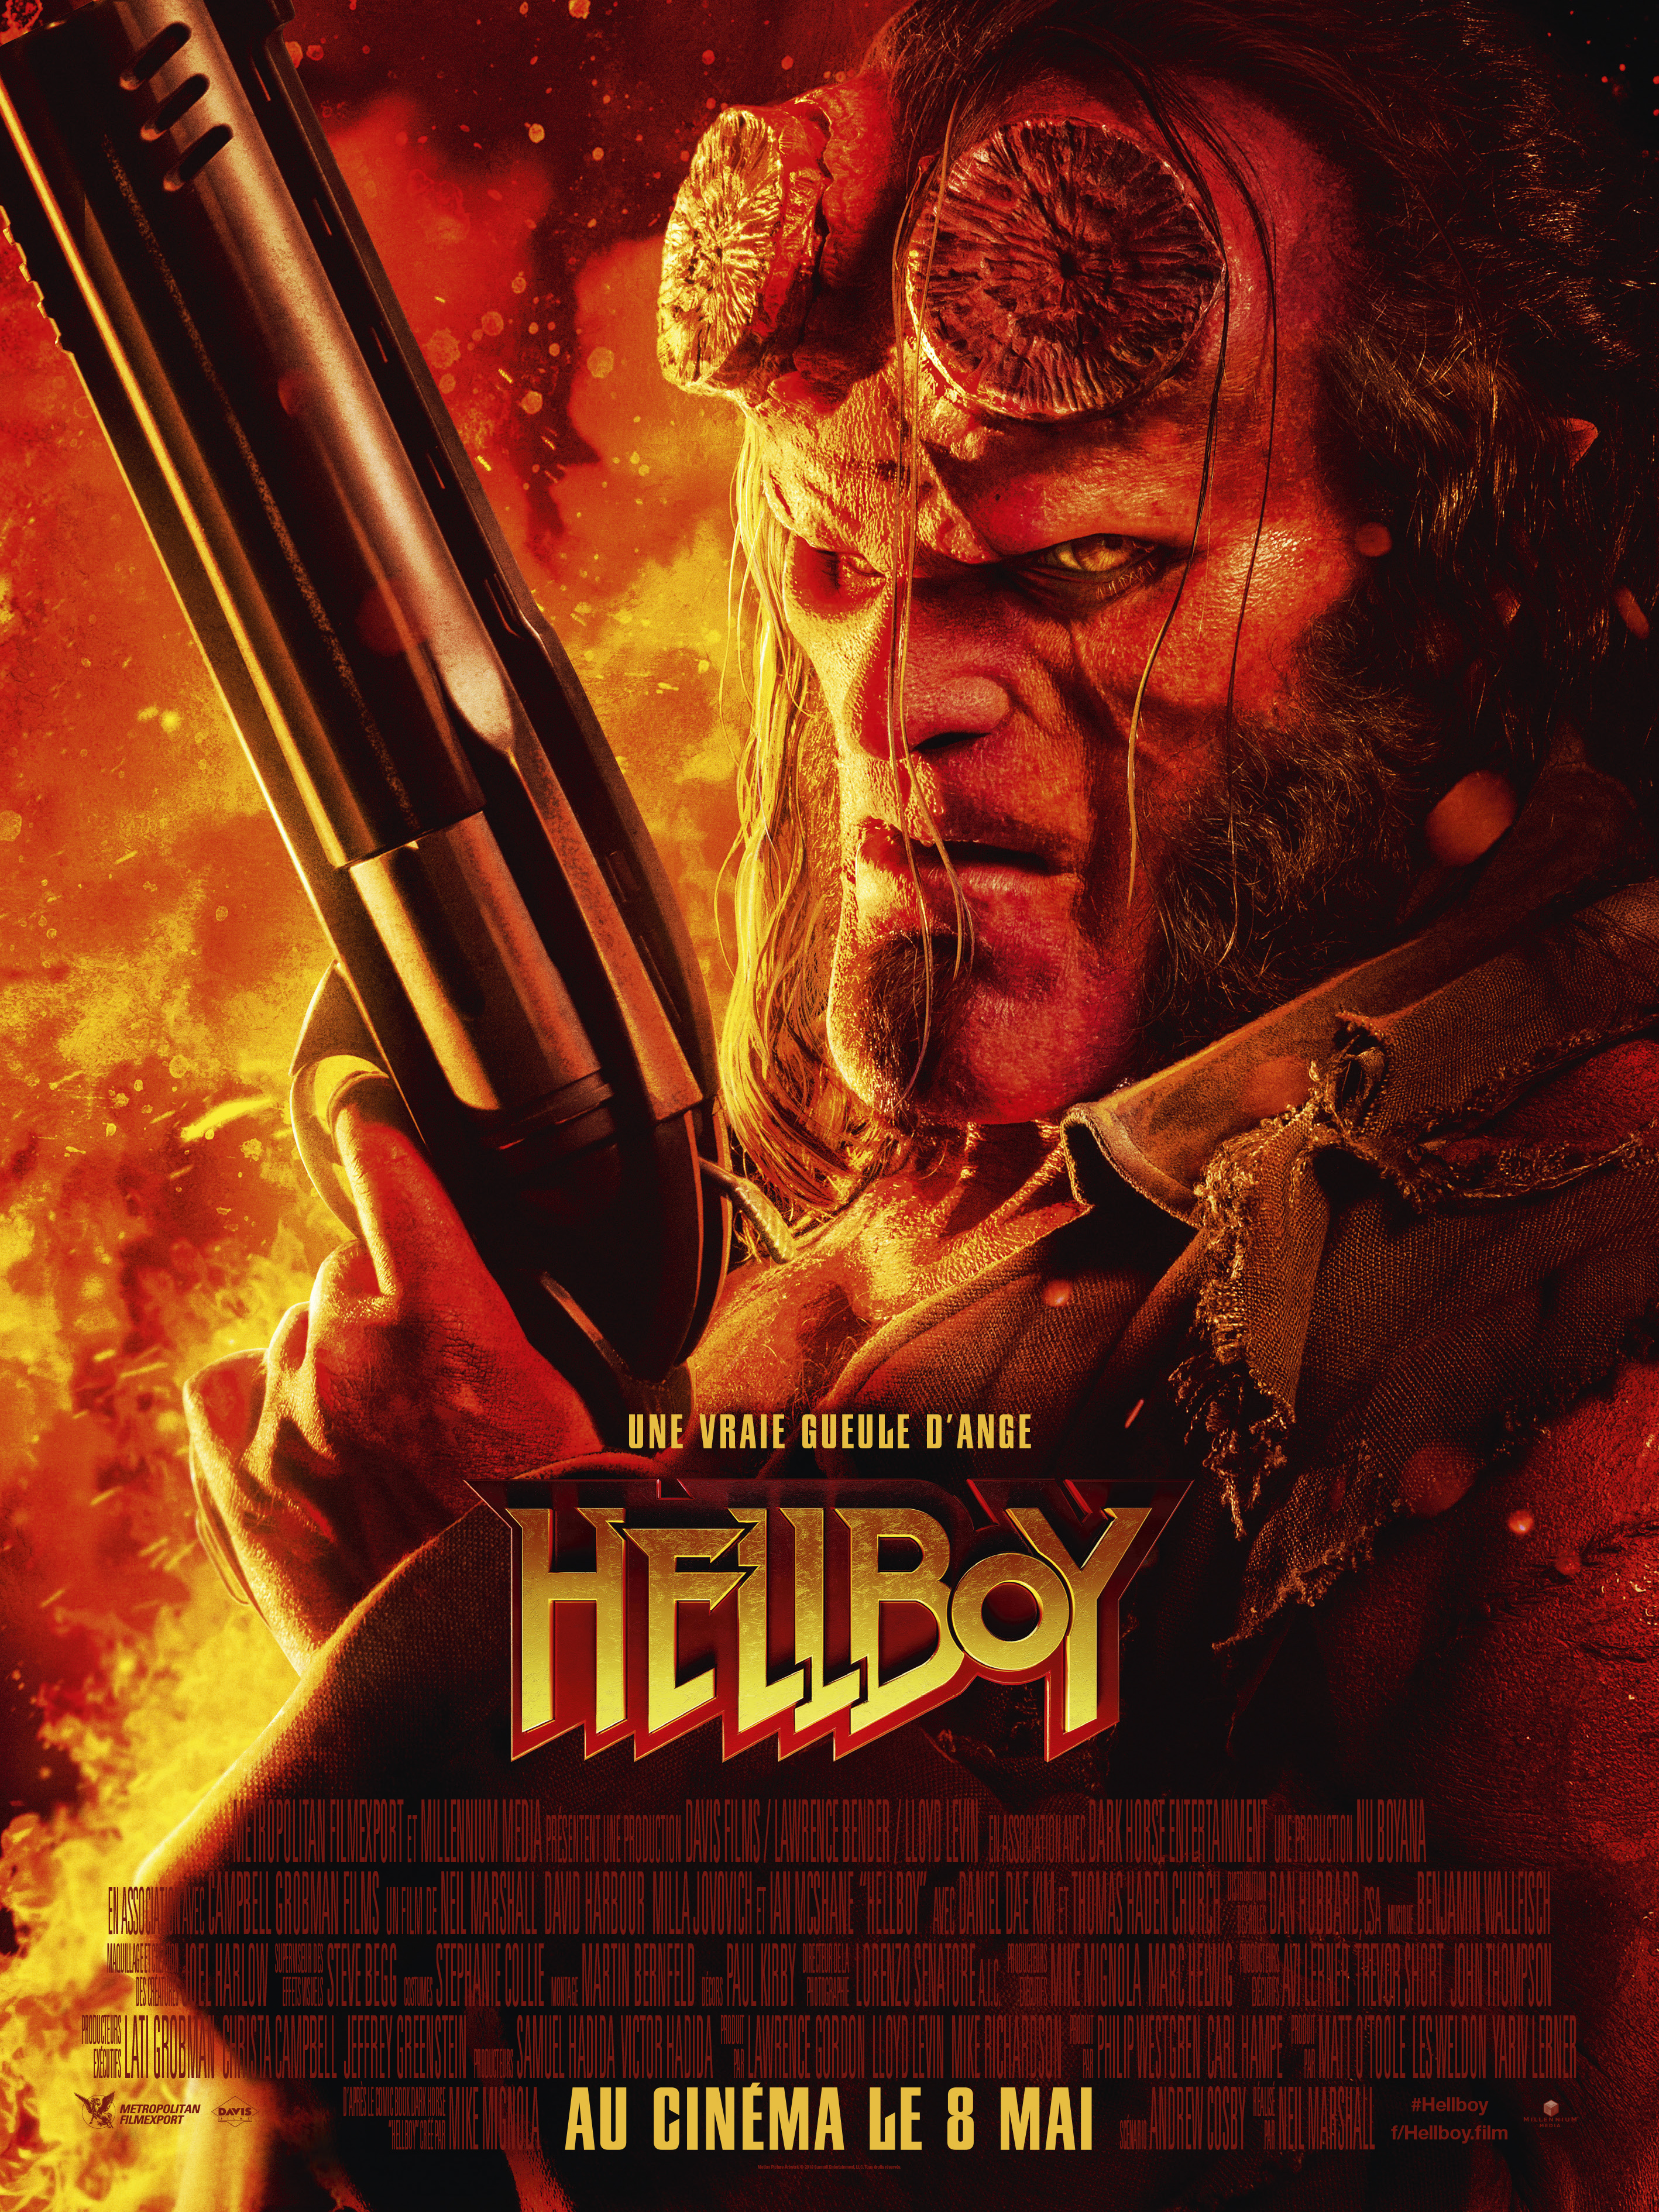 David Harbour In Hellboy Movie 2019 Wallpapers